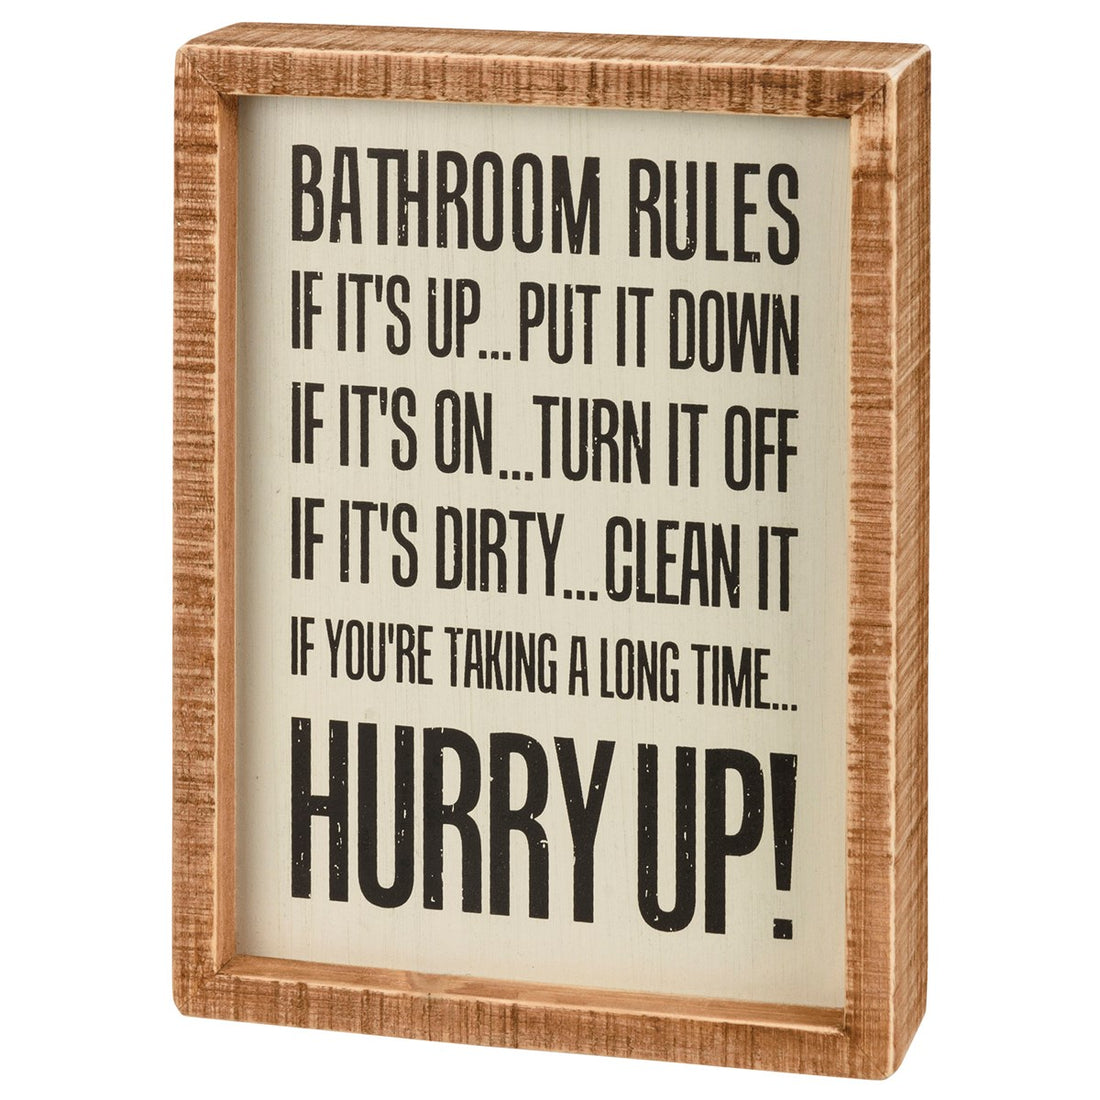 Hurry Up - Bathroom